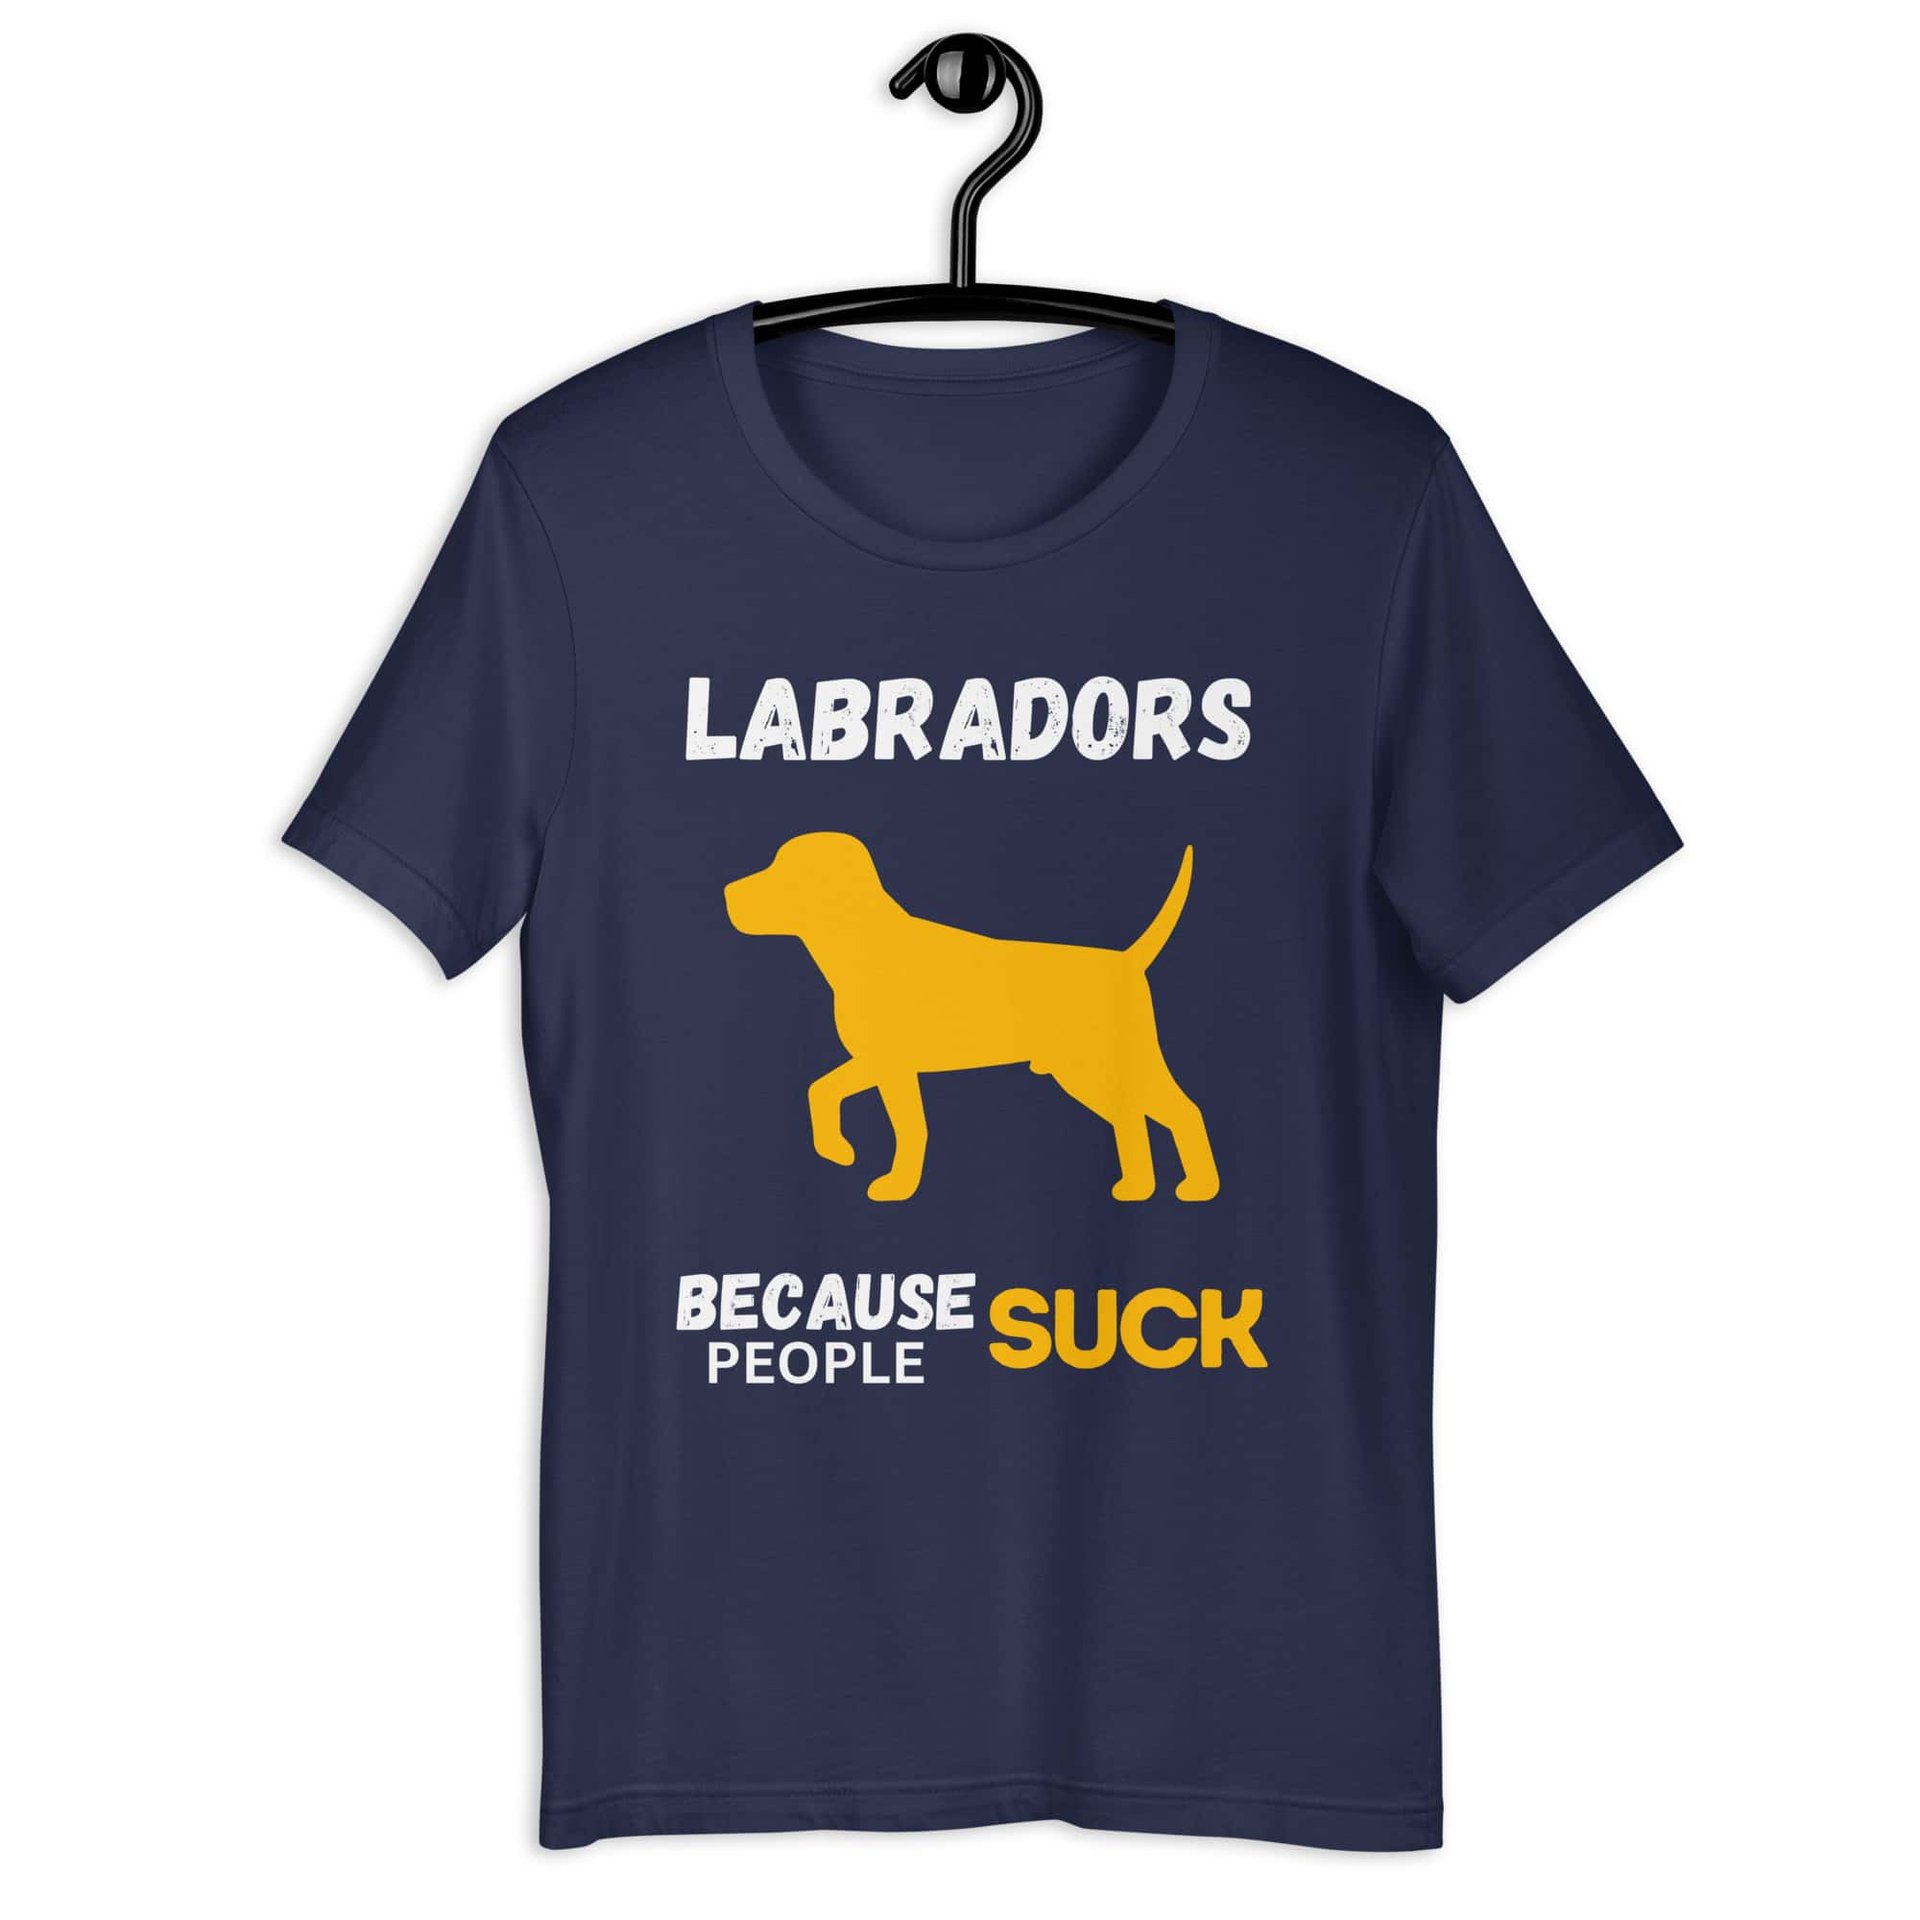 Labradors Because People Suck Unisex T-Shirt navy